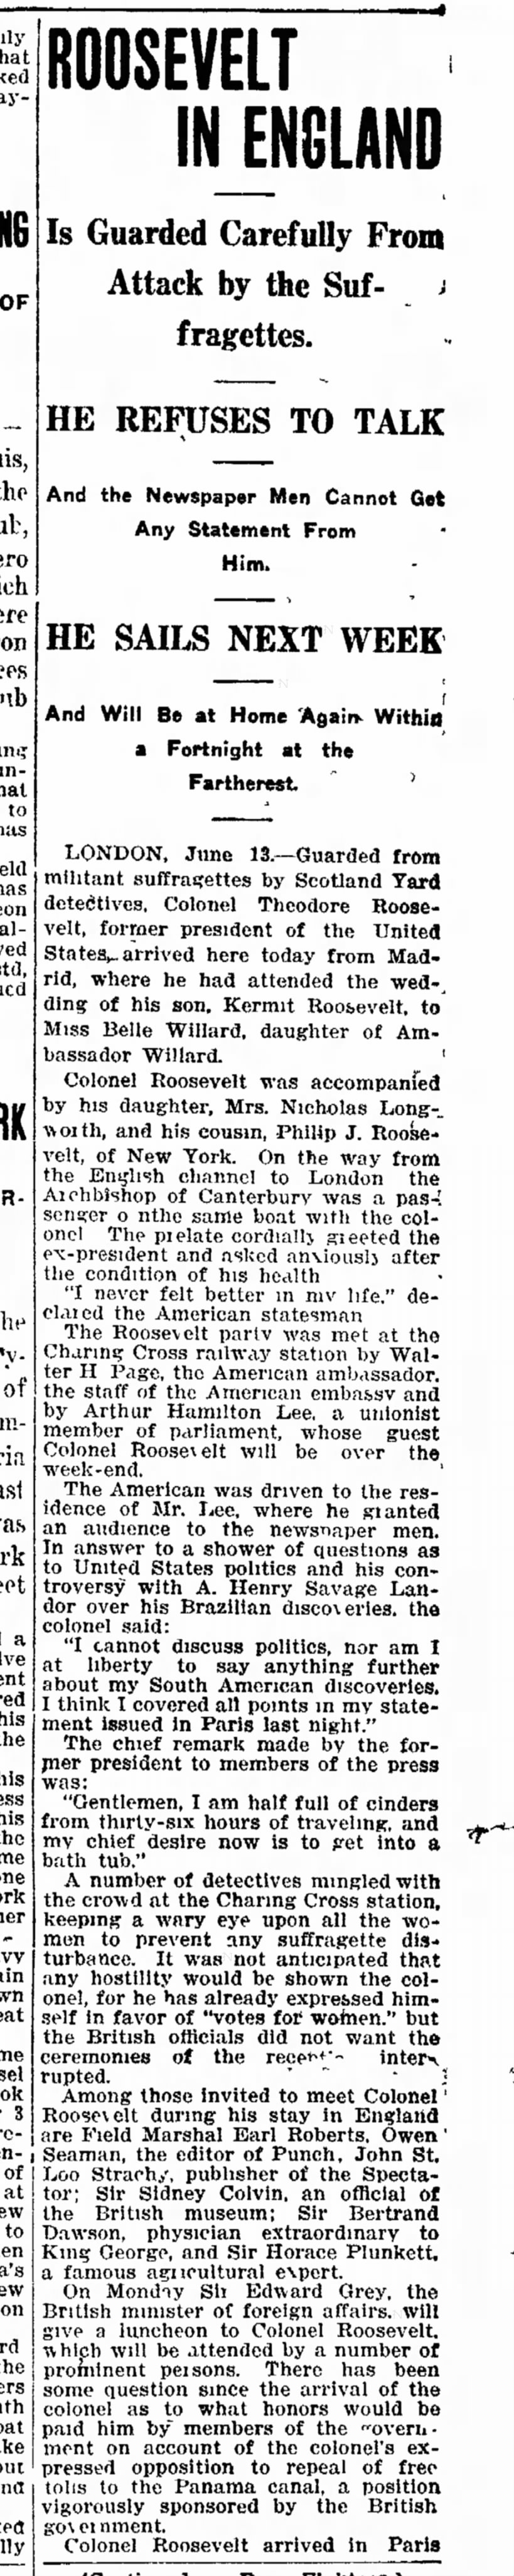 The Fort Wayne News roosevelt reception13 June 1914